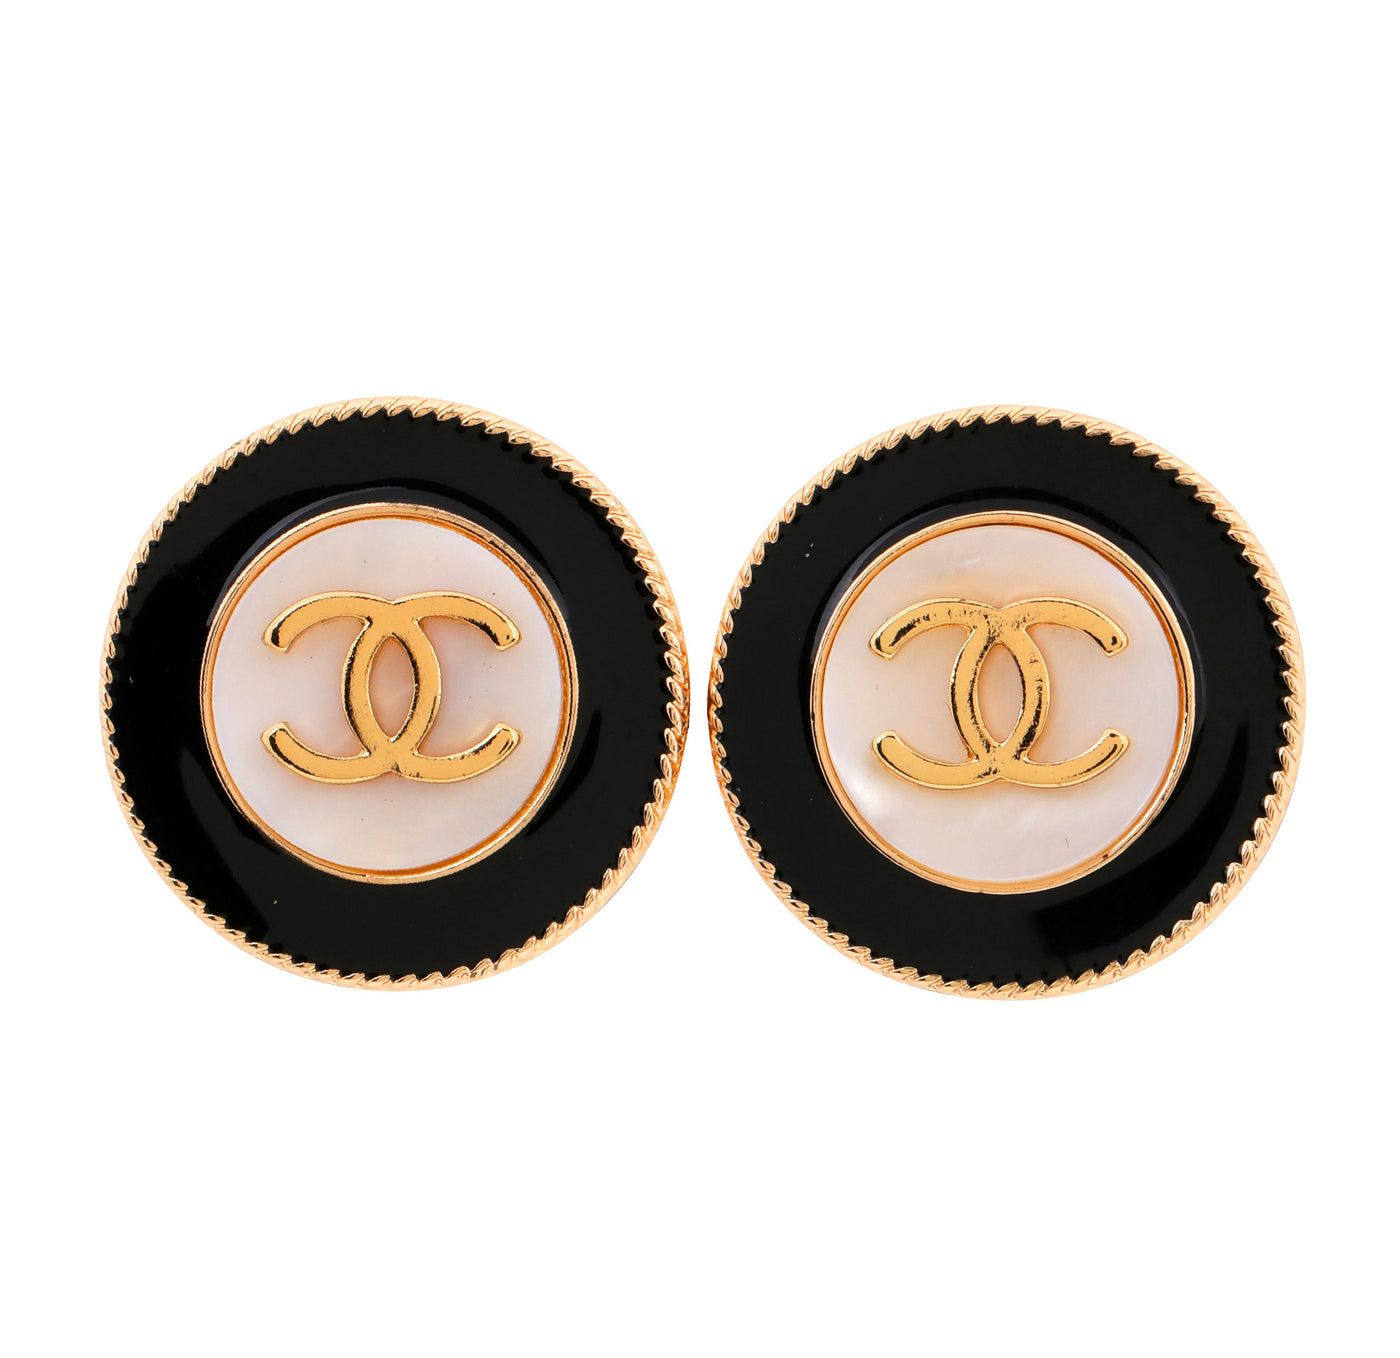 Chanel Black & White Pearlized CC Pierce Earrings